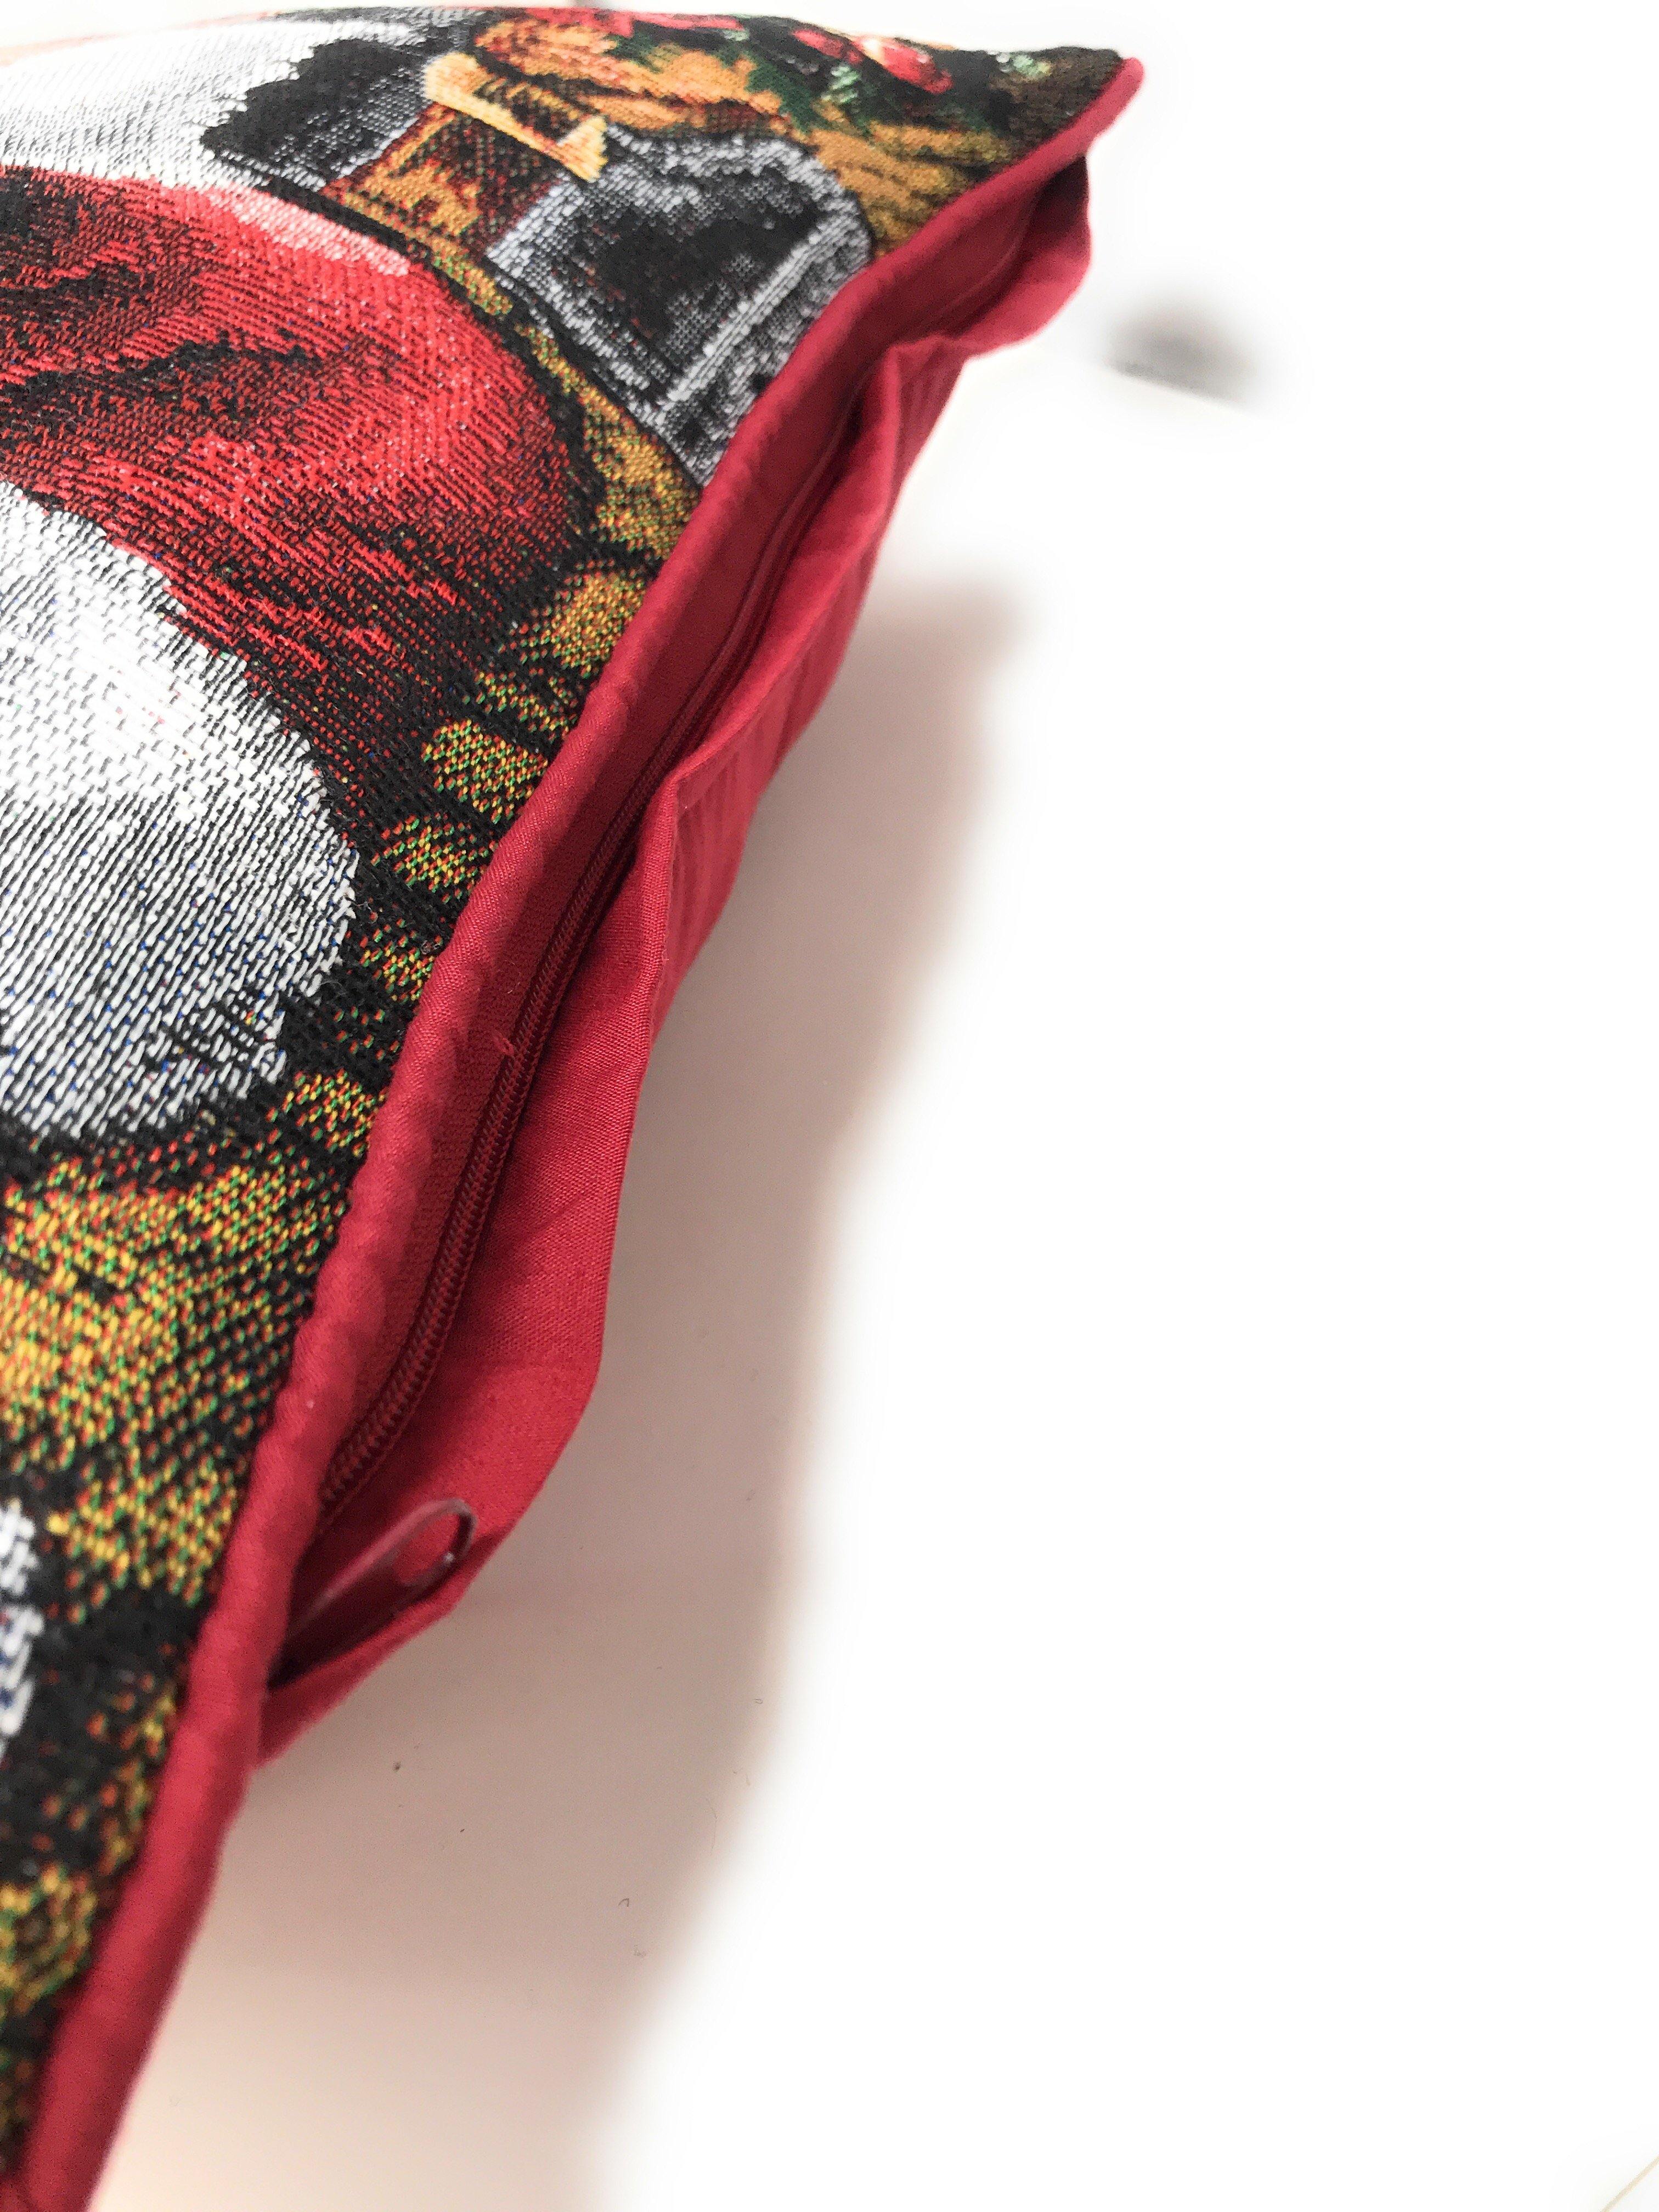 Tache Festive Santa Down the Chimney Tapestry Throw Pillow Cover (DB11533CC) - Tache Home Fashion